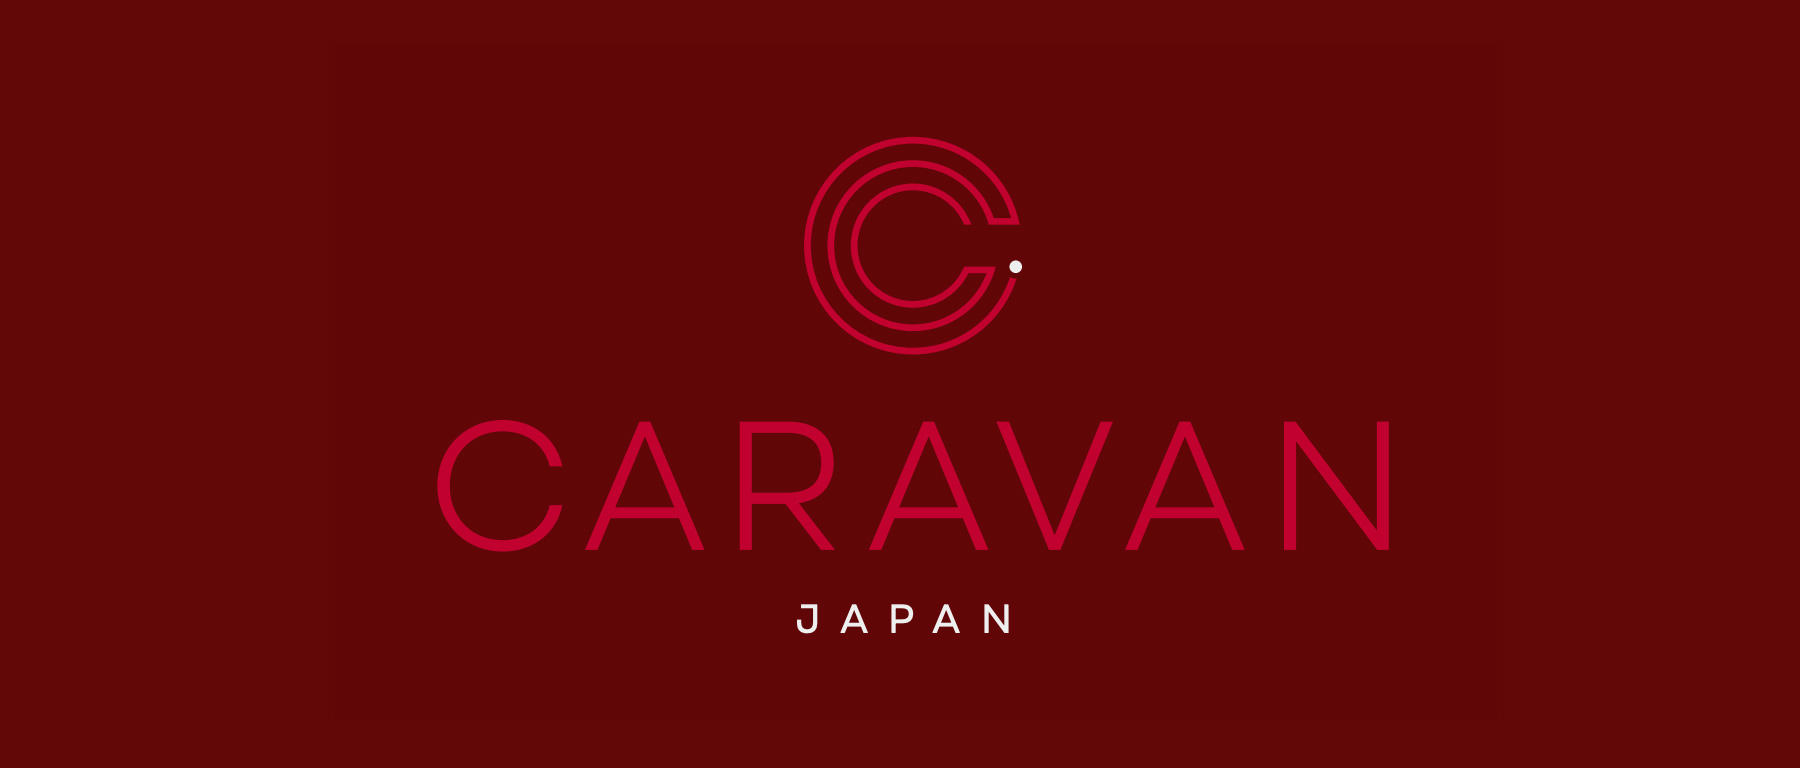 CARAVAN Japan